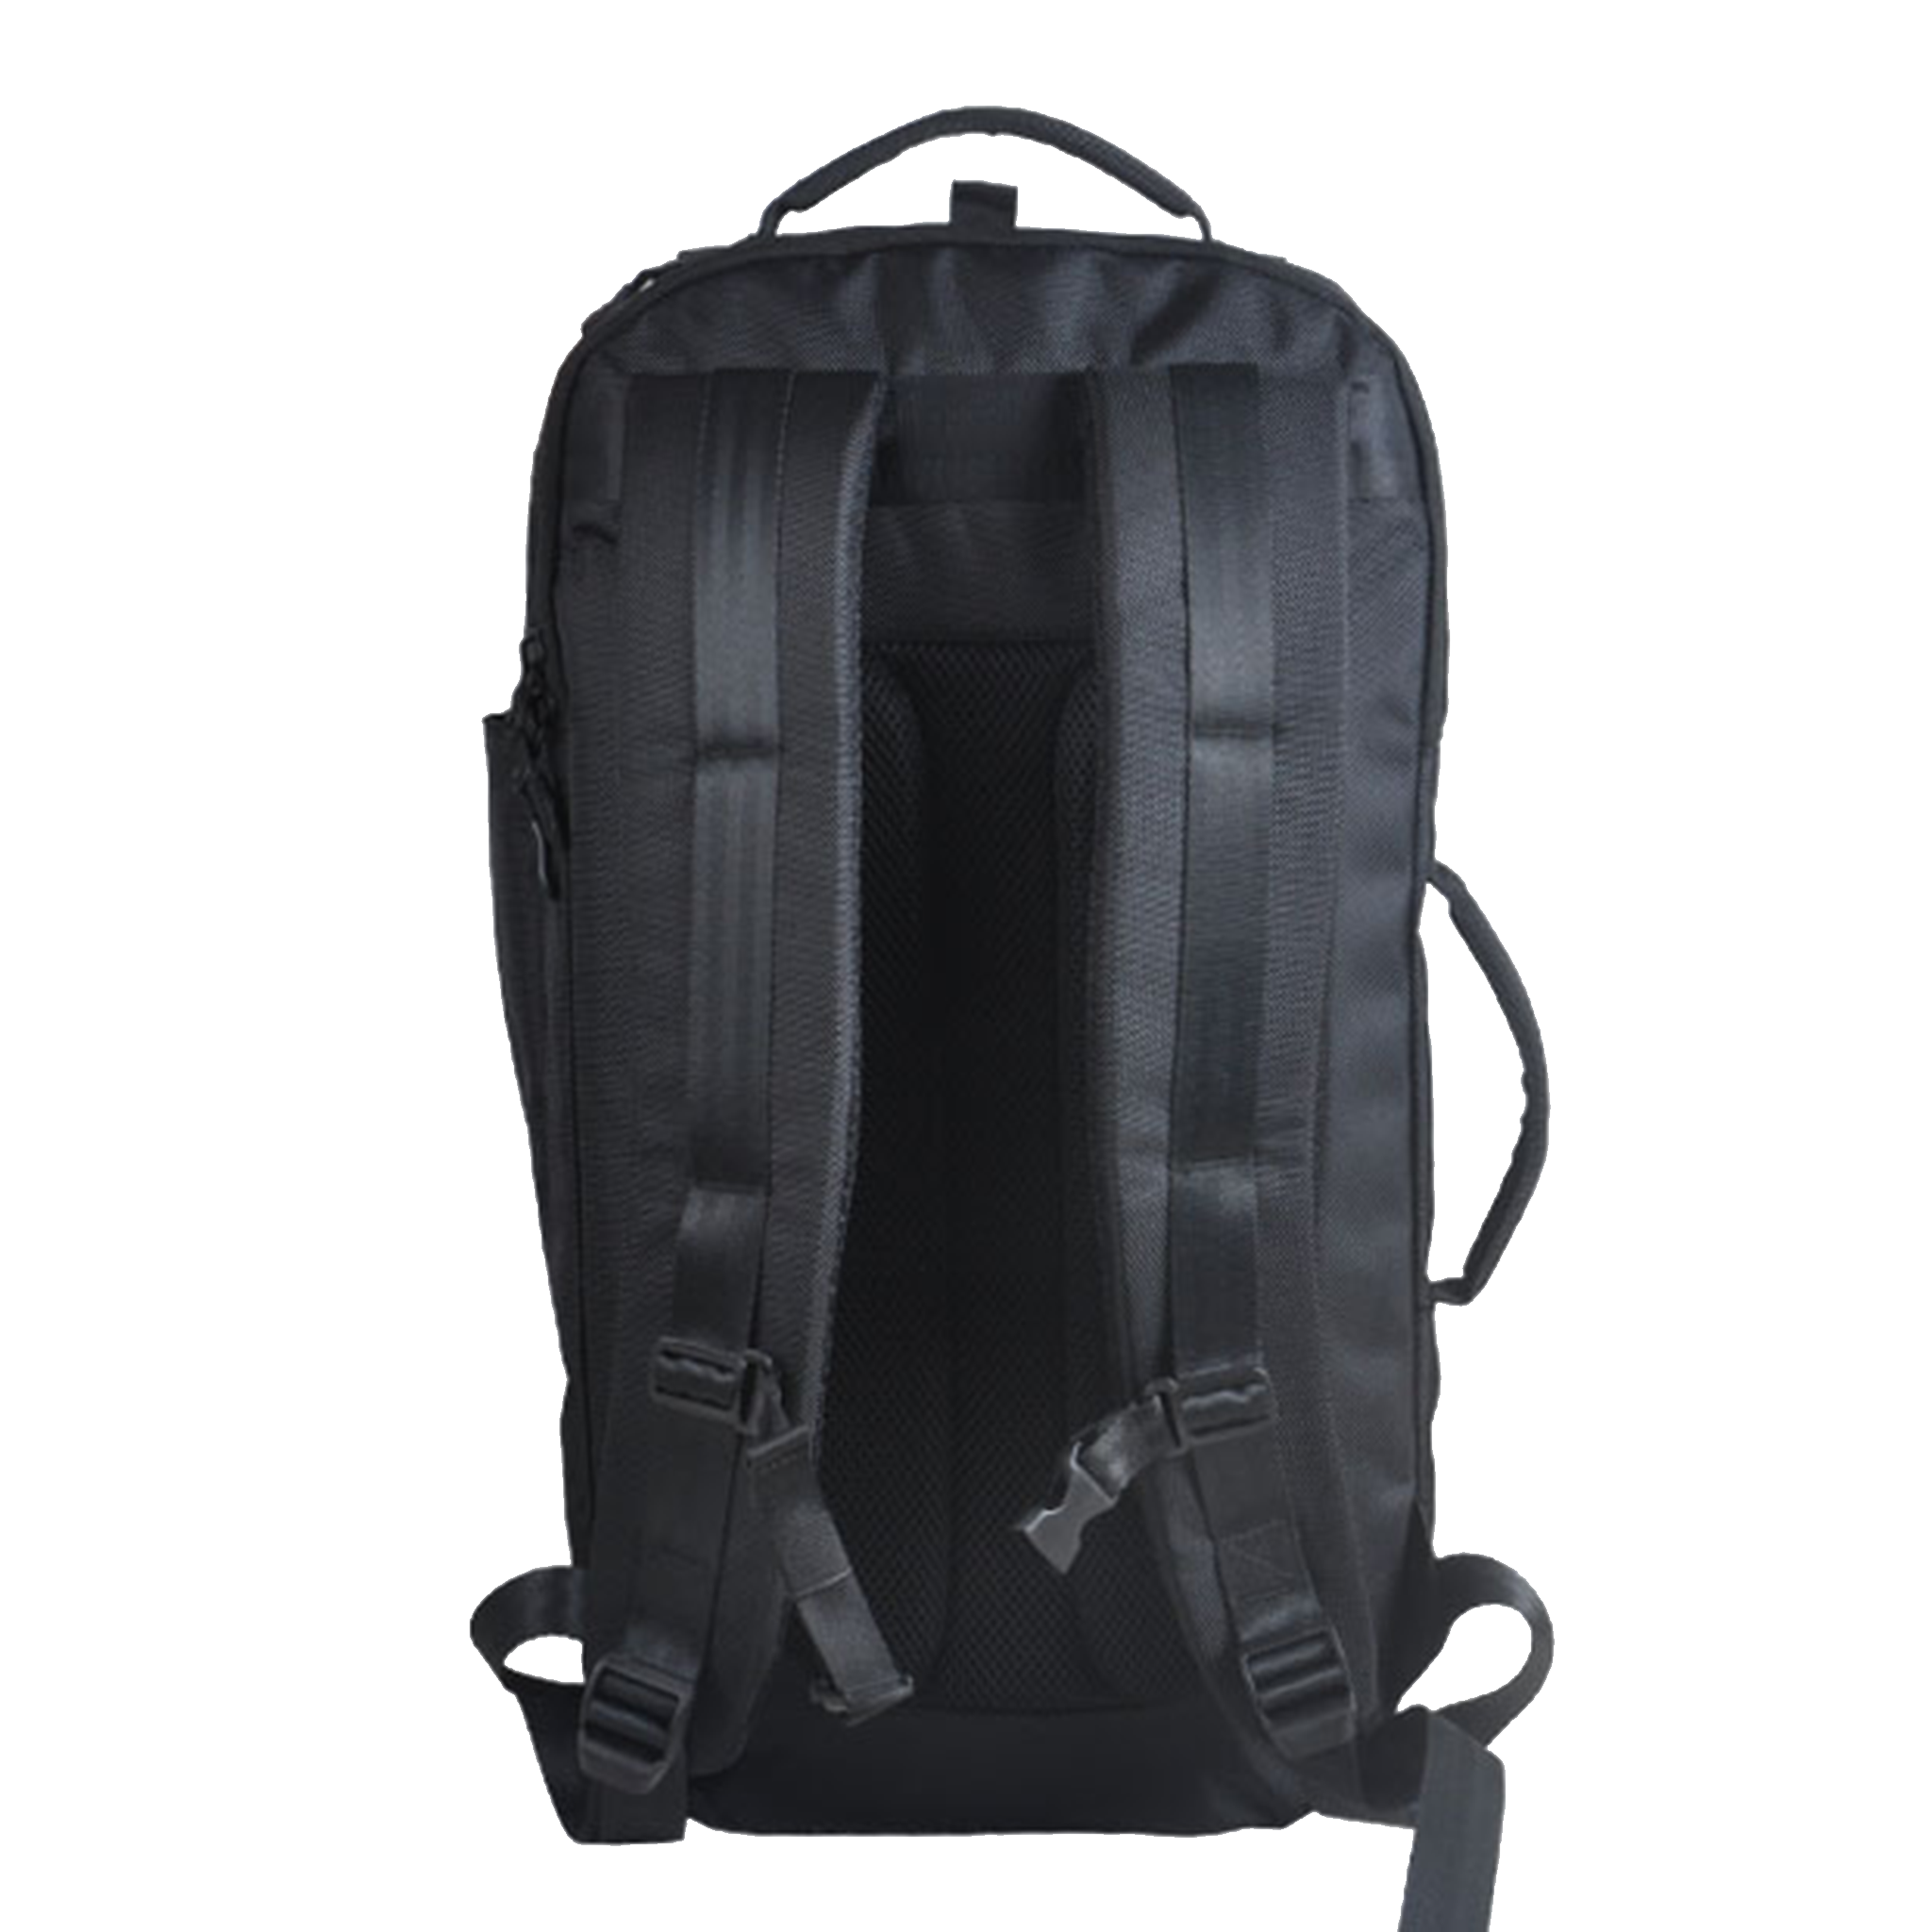 2 in 1 Backpack and Duffel Bag (BK19)